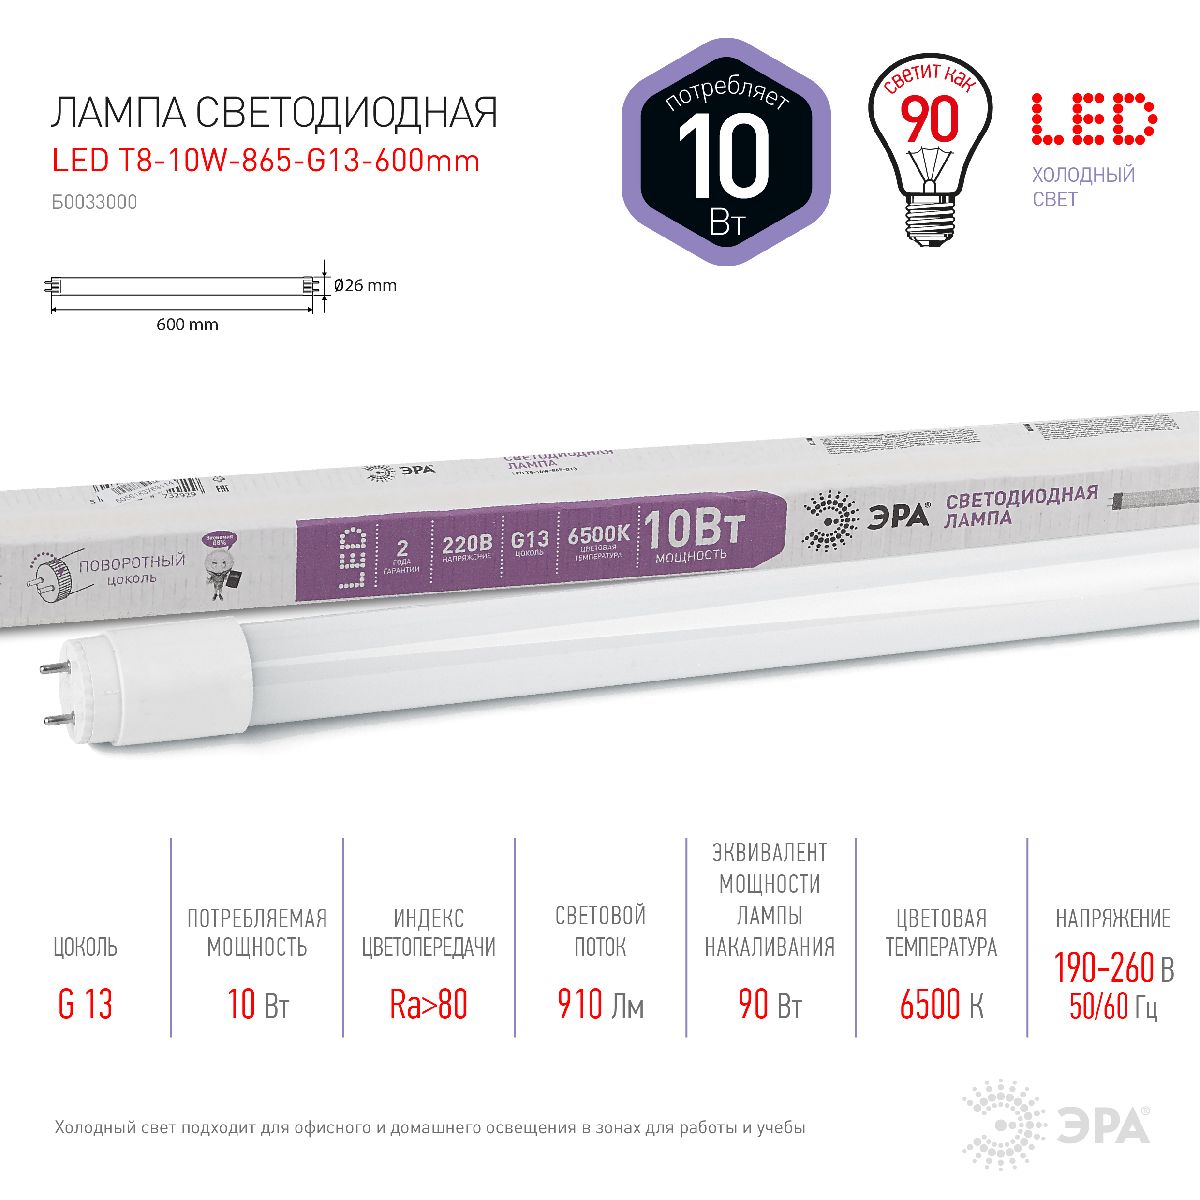 Лампа светодиодная Эра G13 10W 6500K LED T8-10W-865-G13-600mm Б0033000